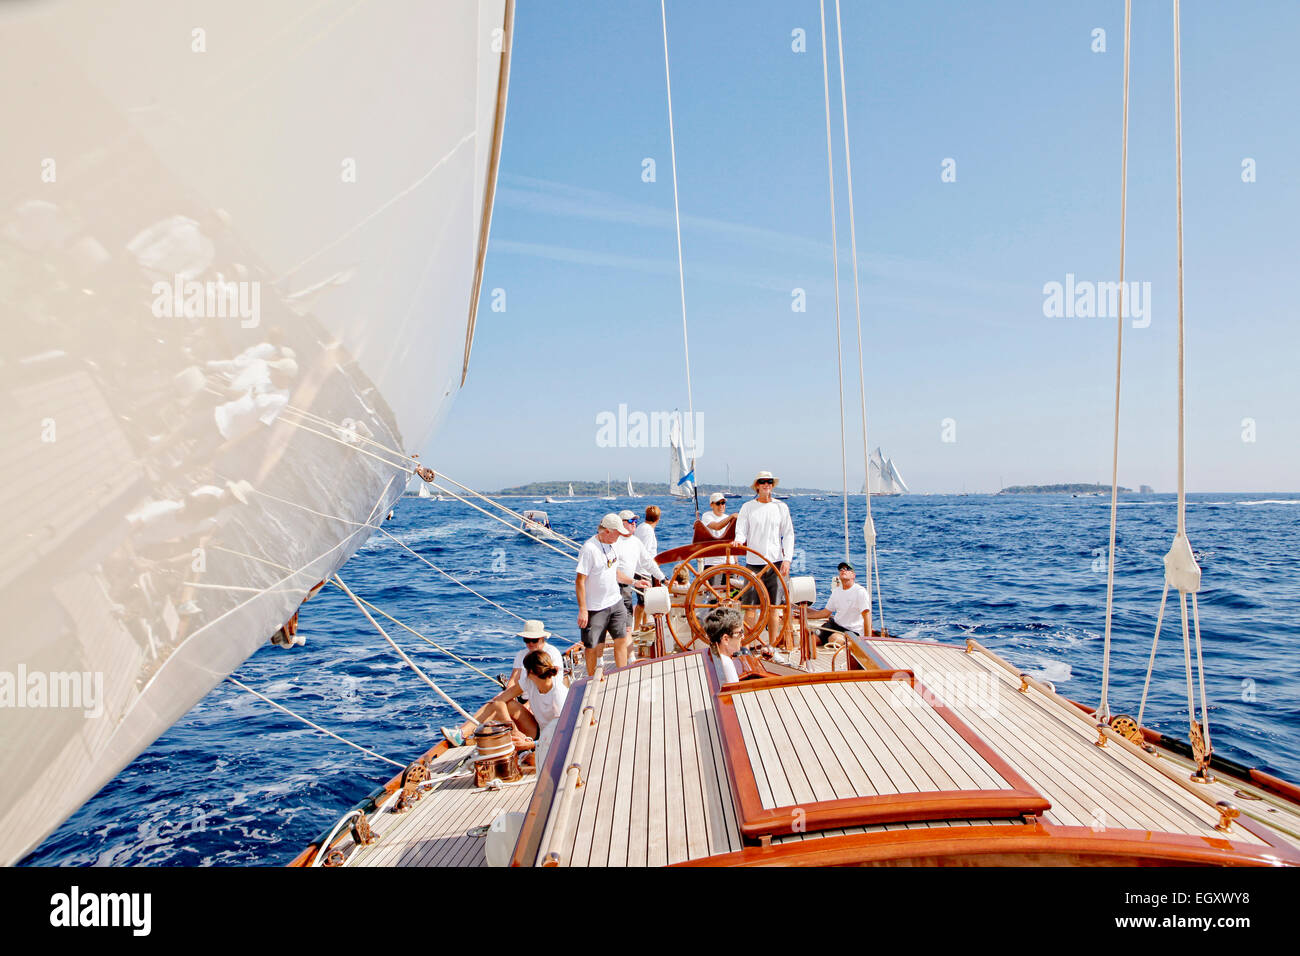 An Bord Shamrock V (JK3) während der Regates Royales in Cannes, Frankreich. Stockfoto